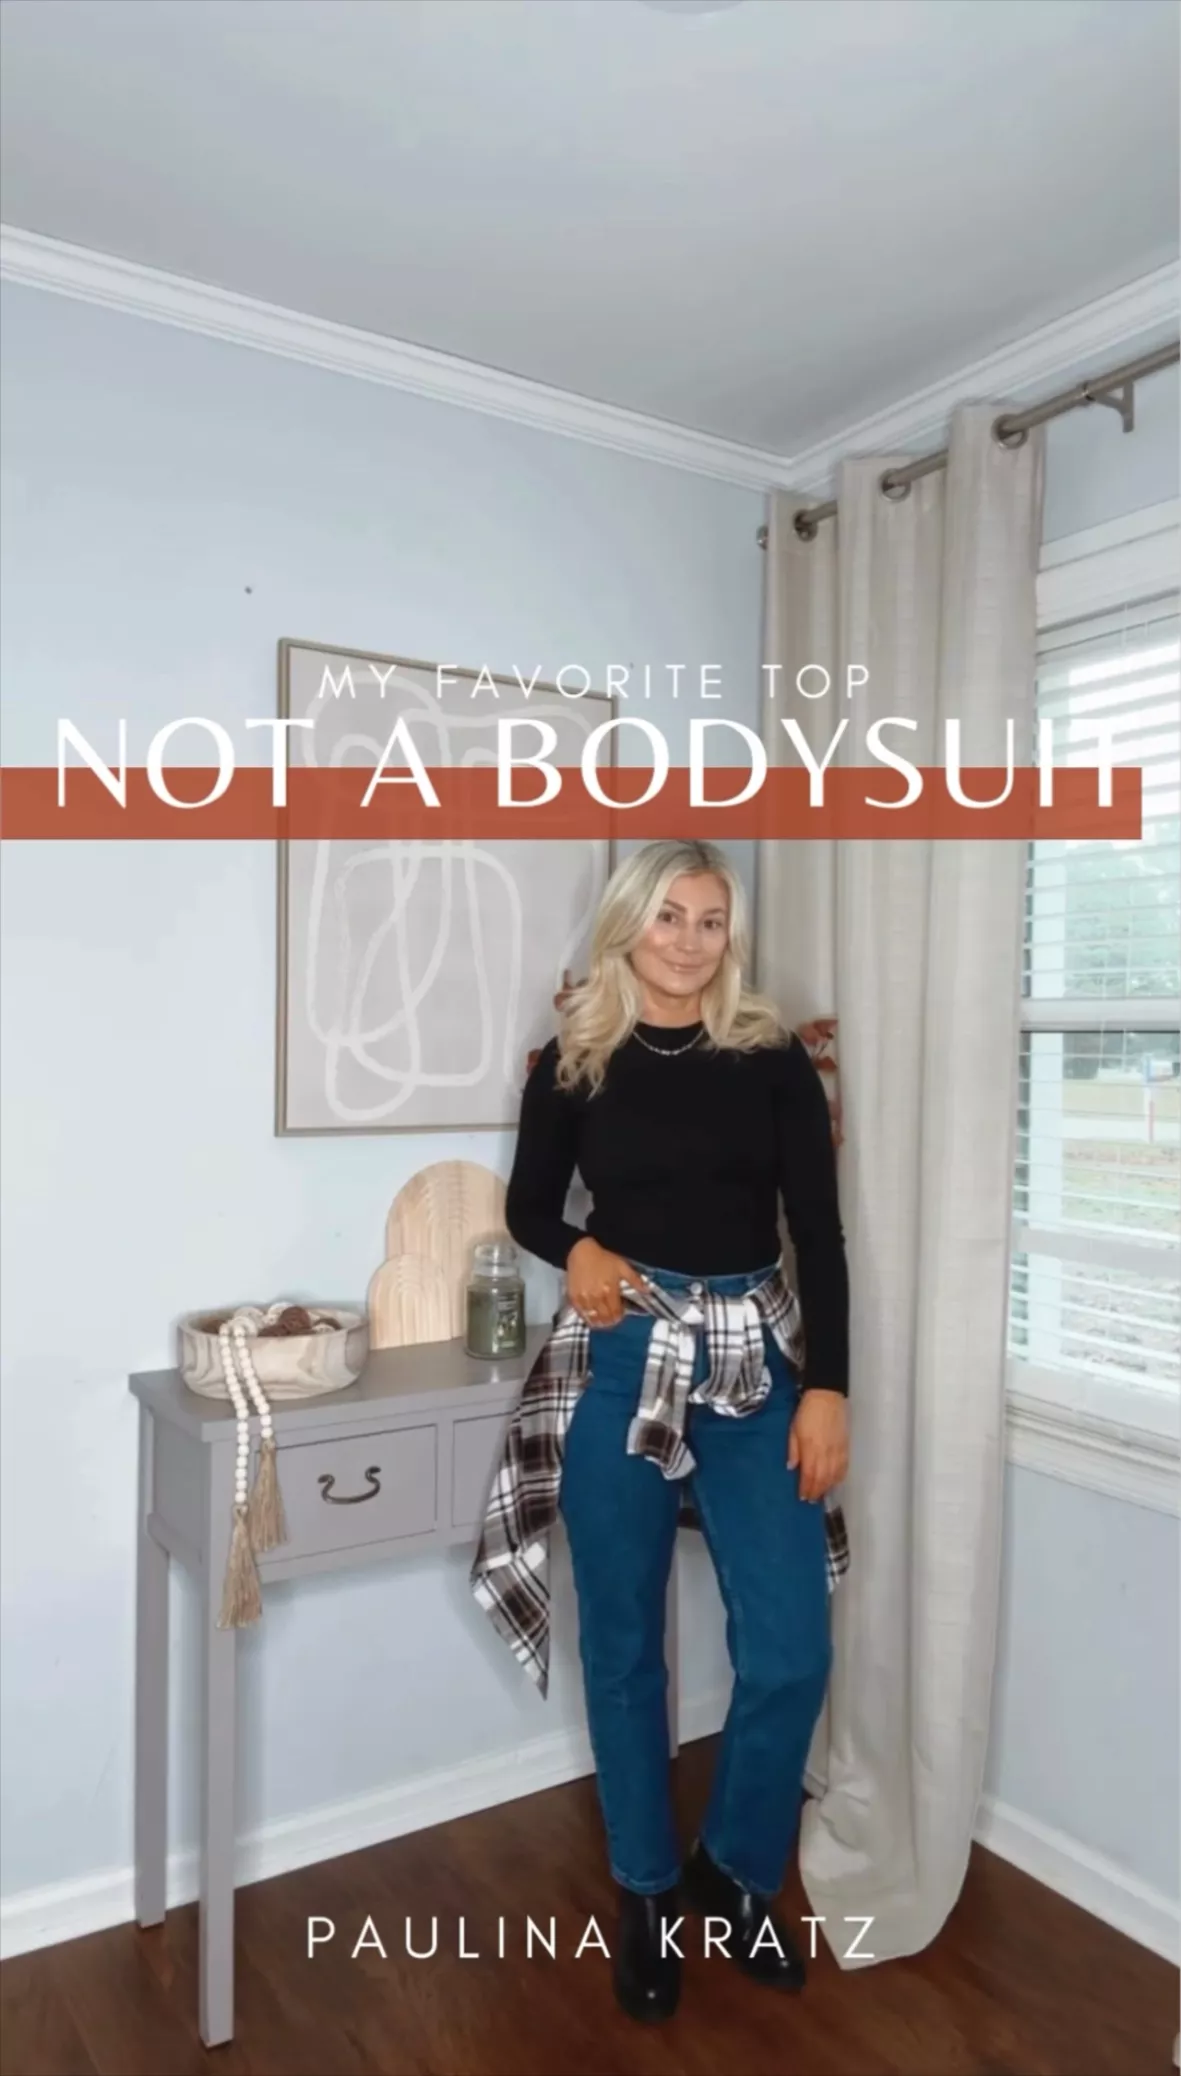 25 Bodysuit Outfit Ideas - the gray details